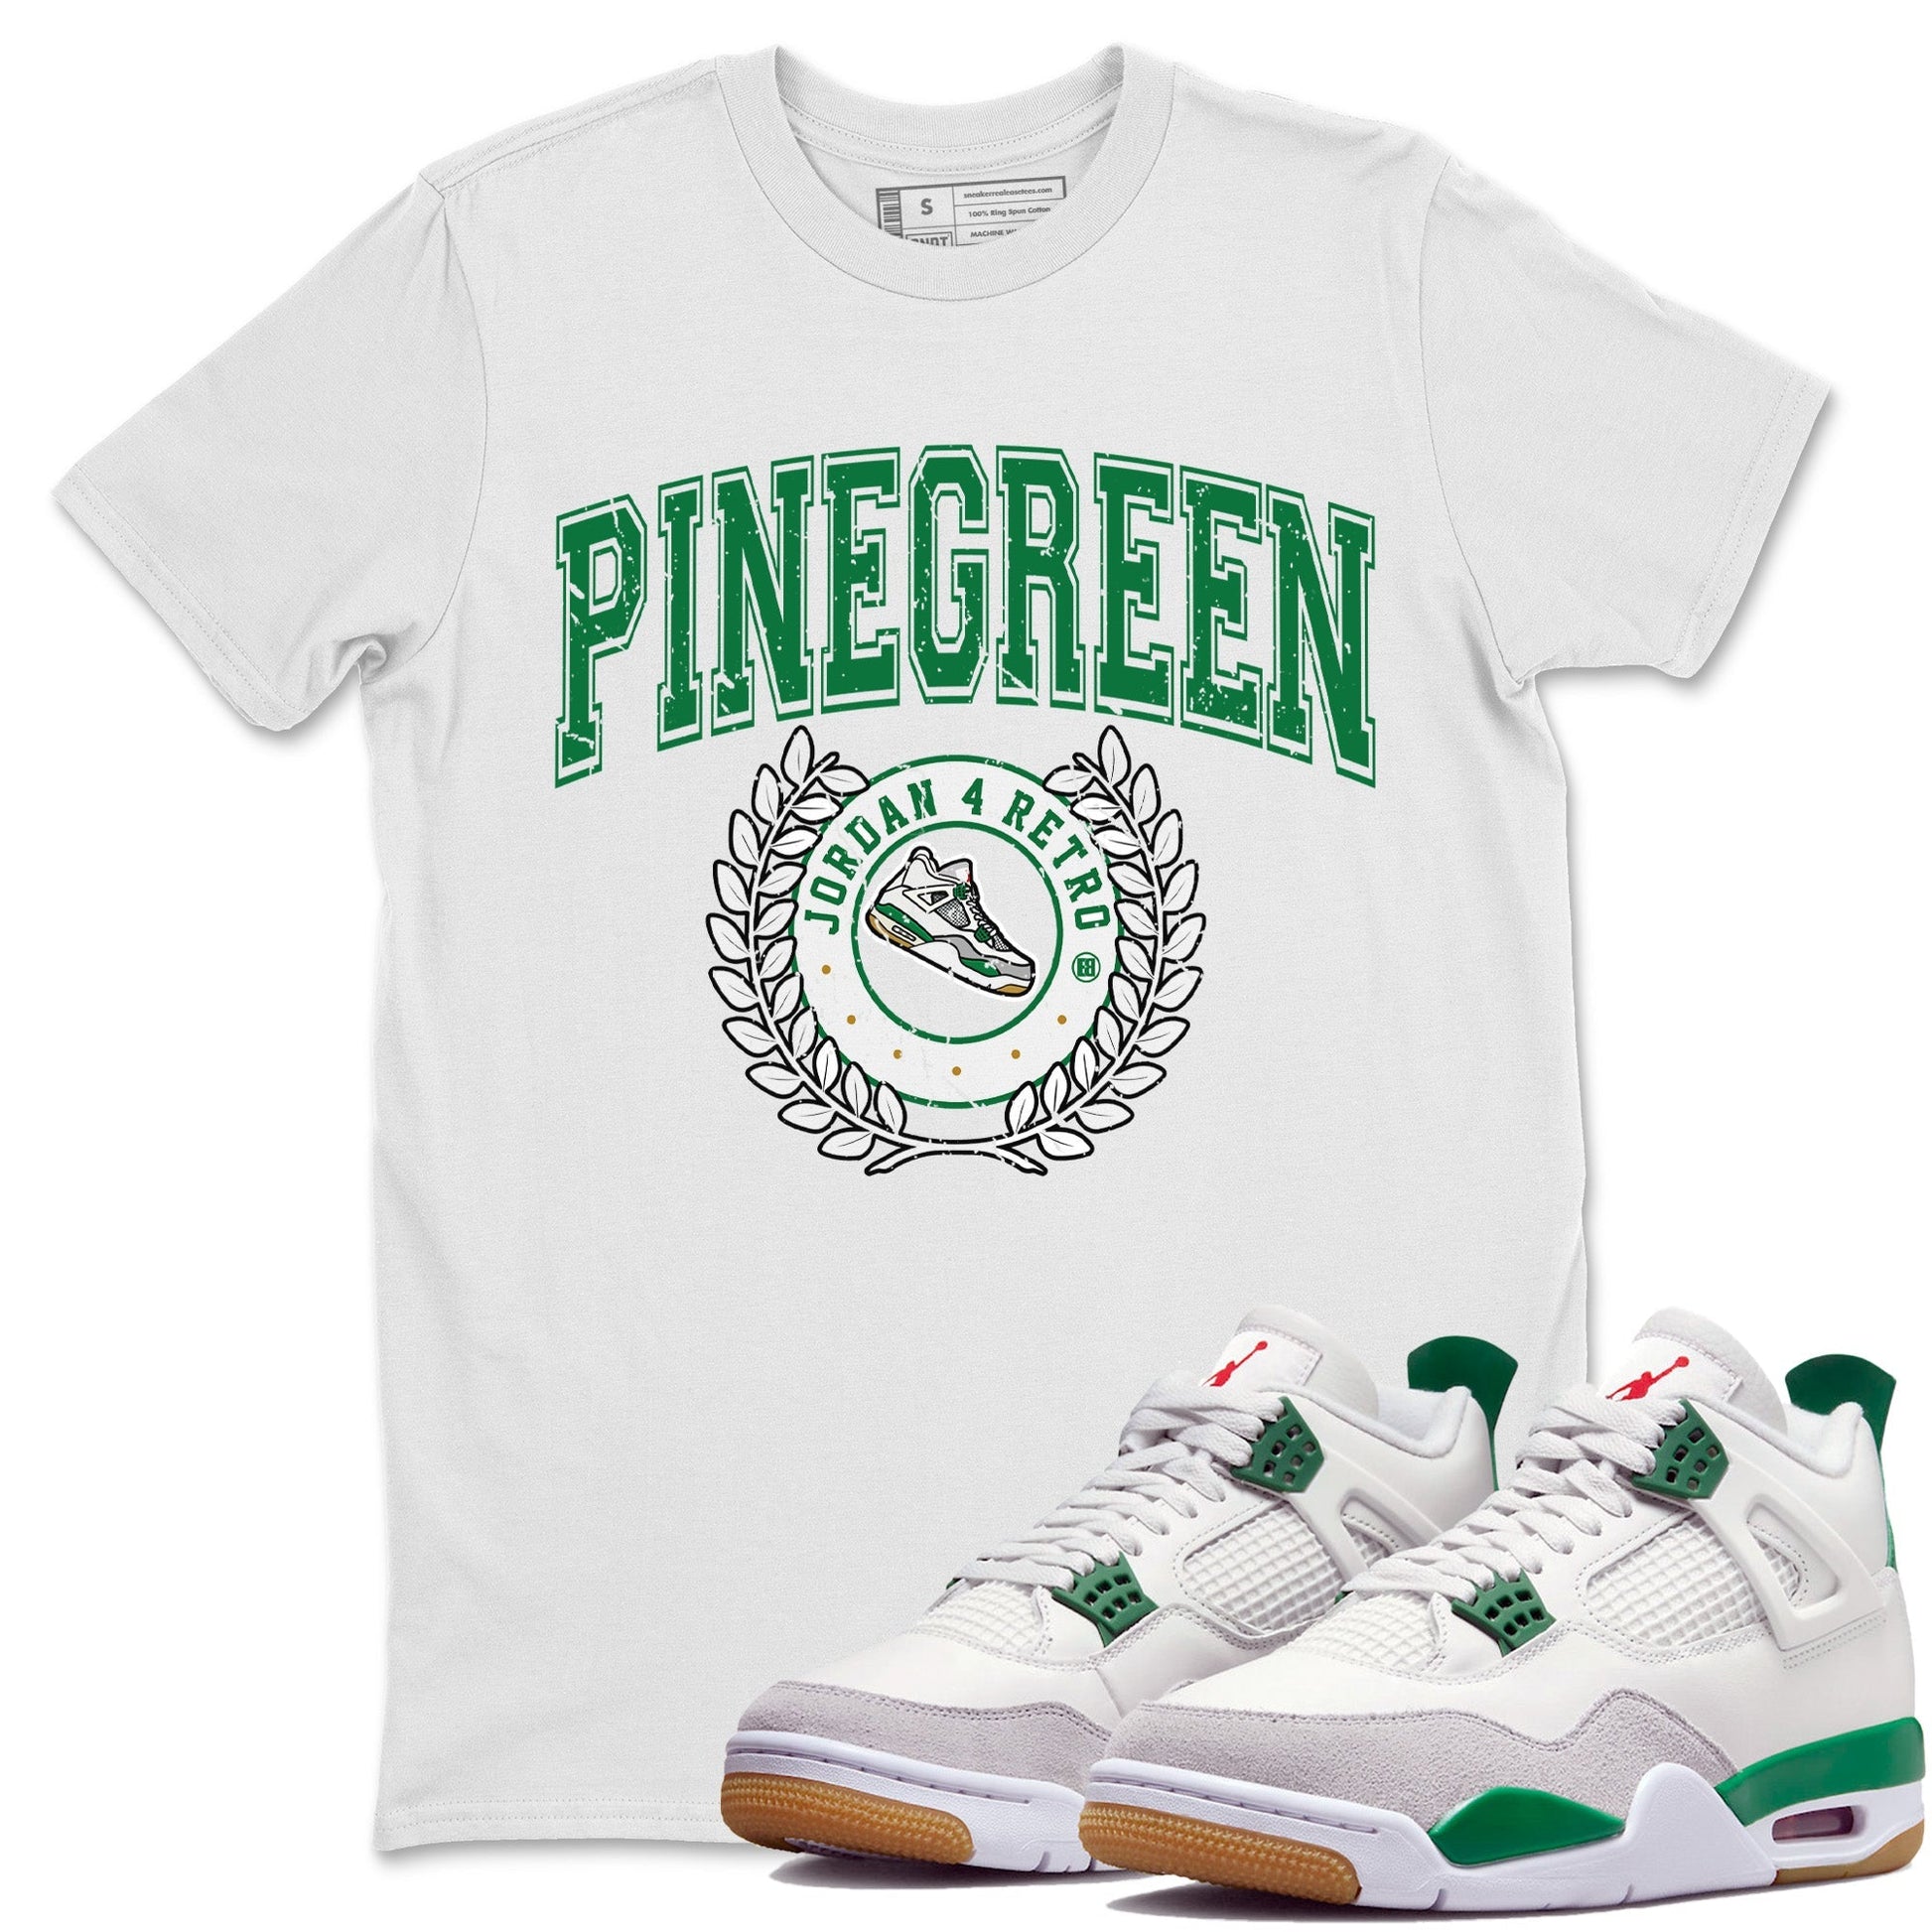 Jordan 4 Pine Green SB Sneaker Match Tees Sneaker Letter Sneaker Tees Nike SB Air Jordan 4 Pine Green Sneaker Tees Sneaker Release Shirts Unisex Shirts White 1